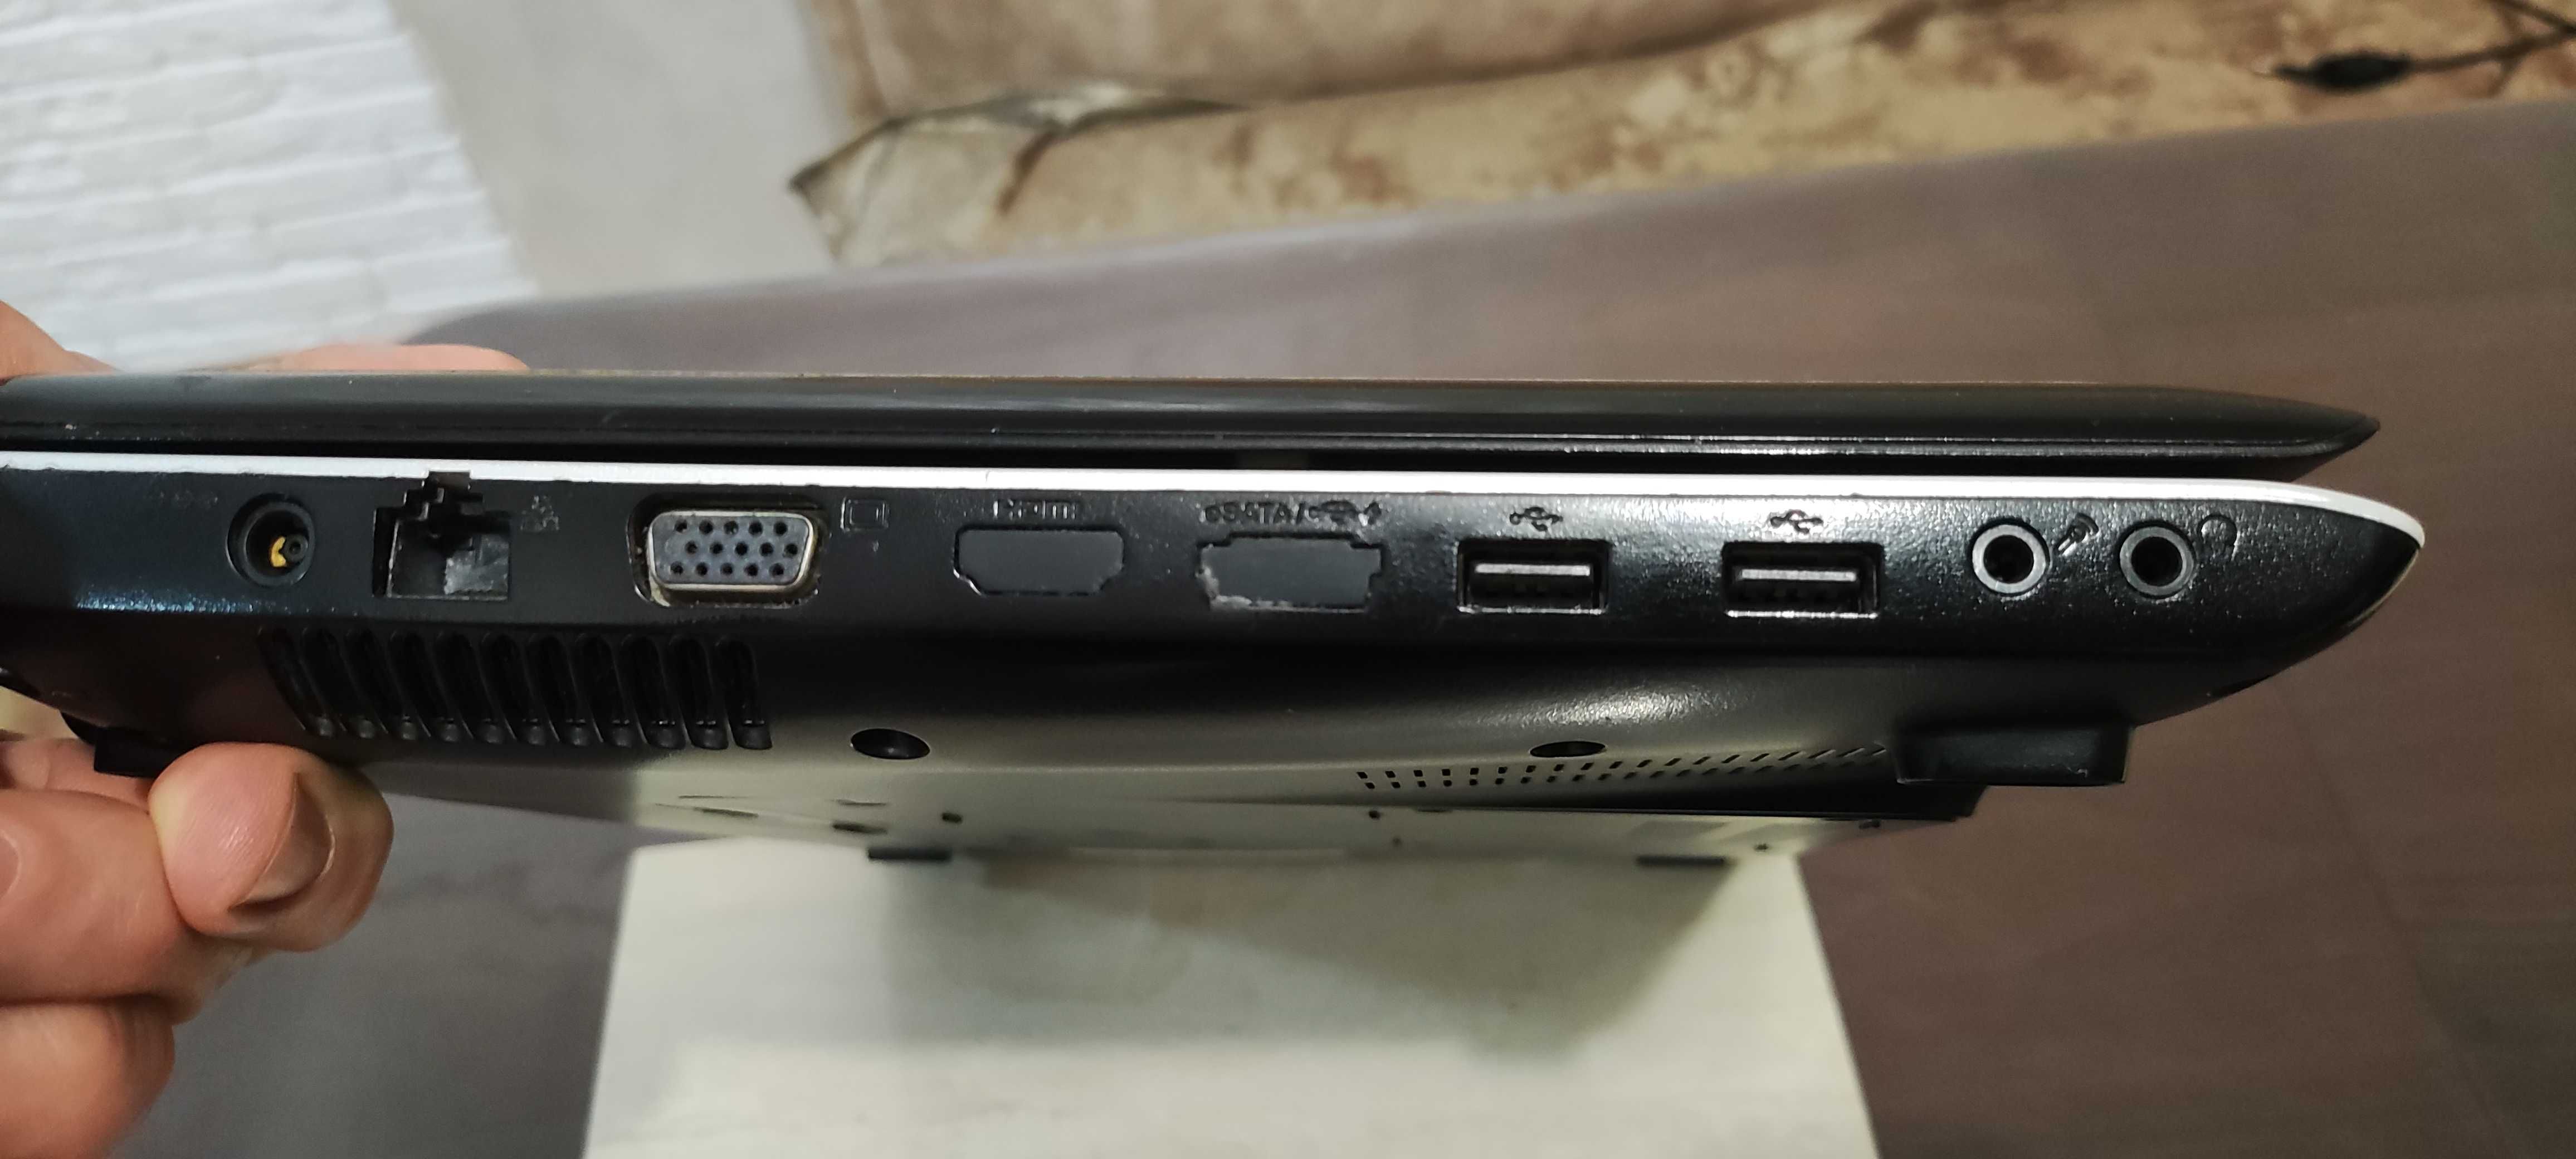 ноутбук Samsung RV408